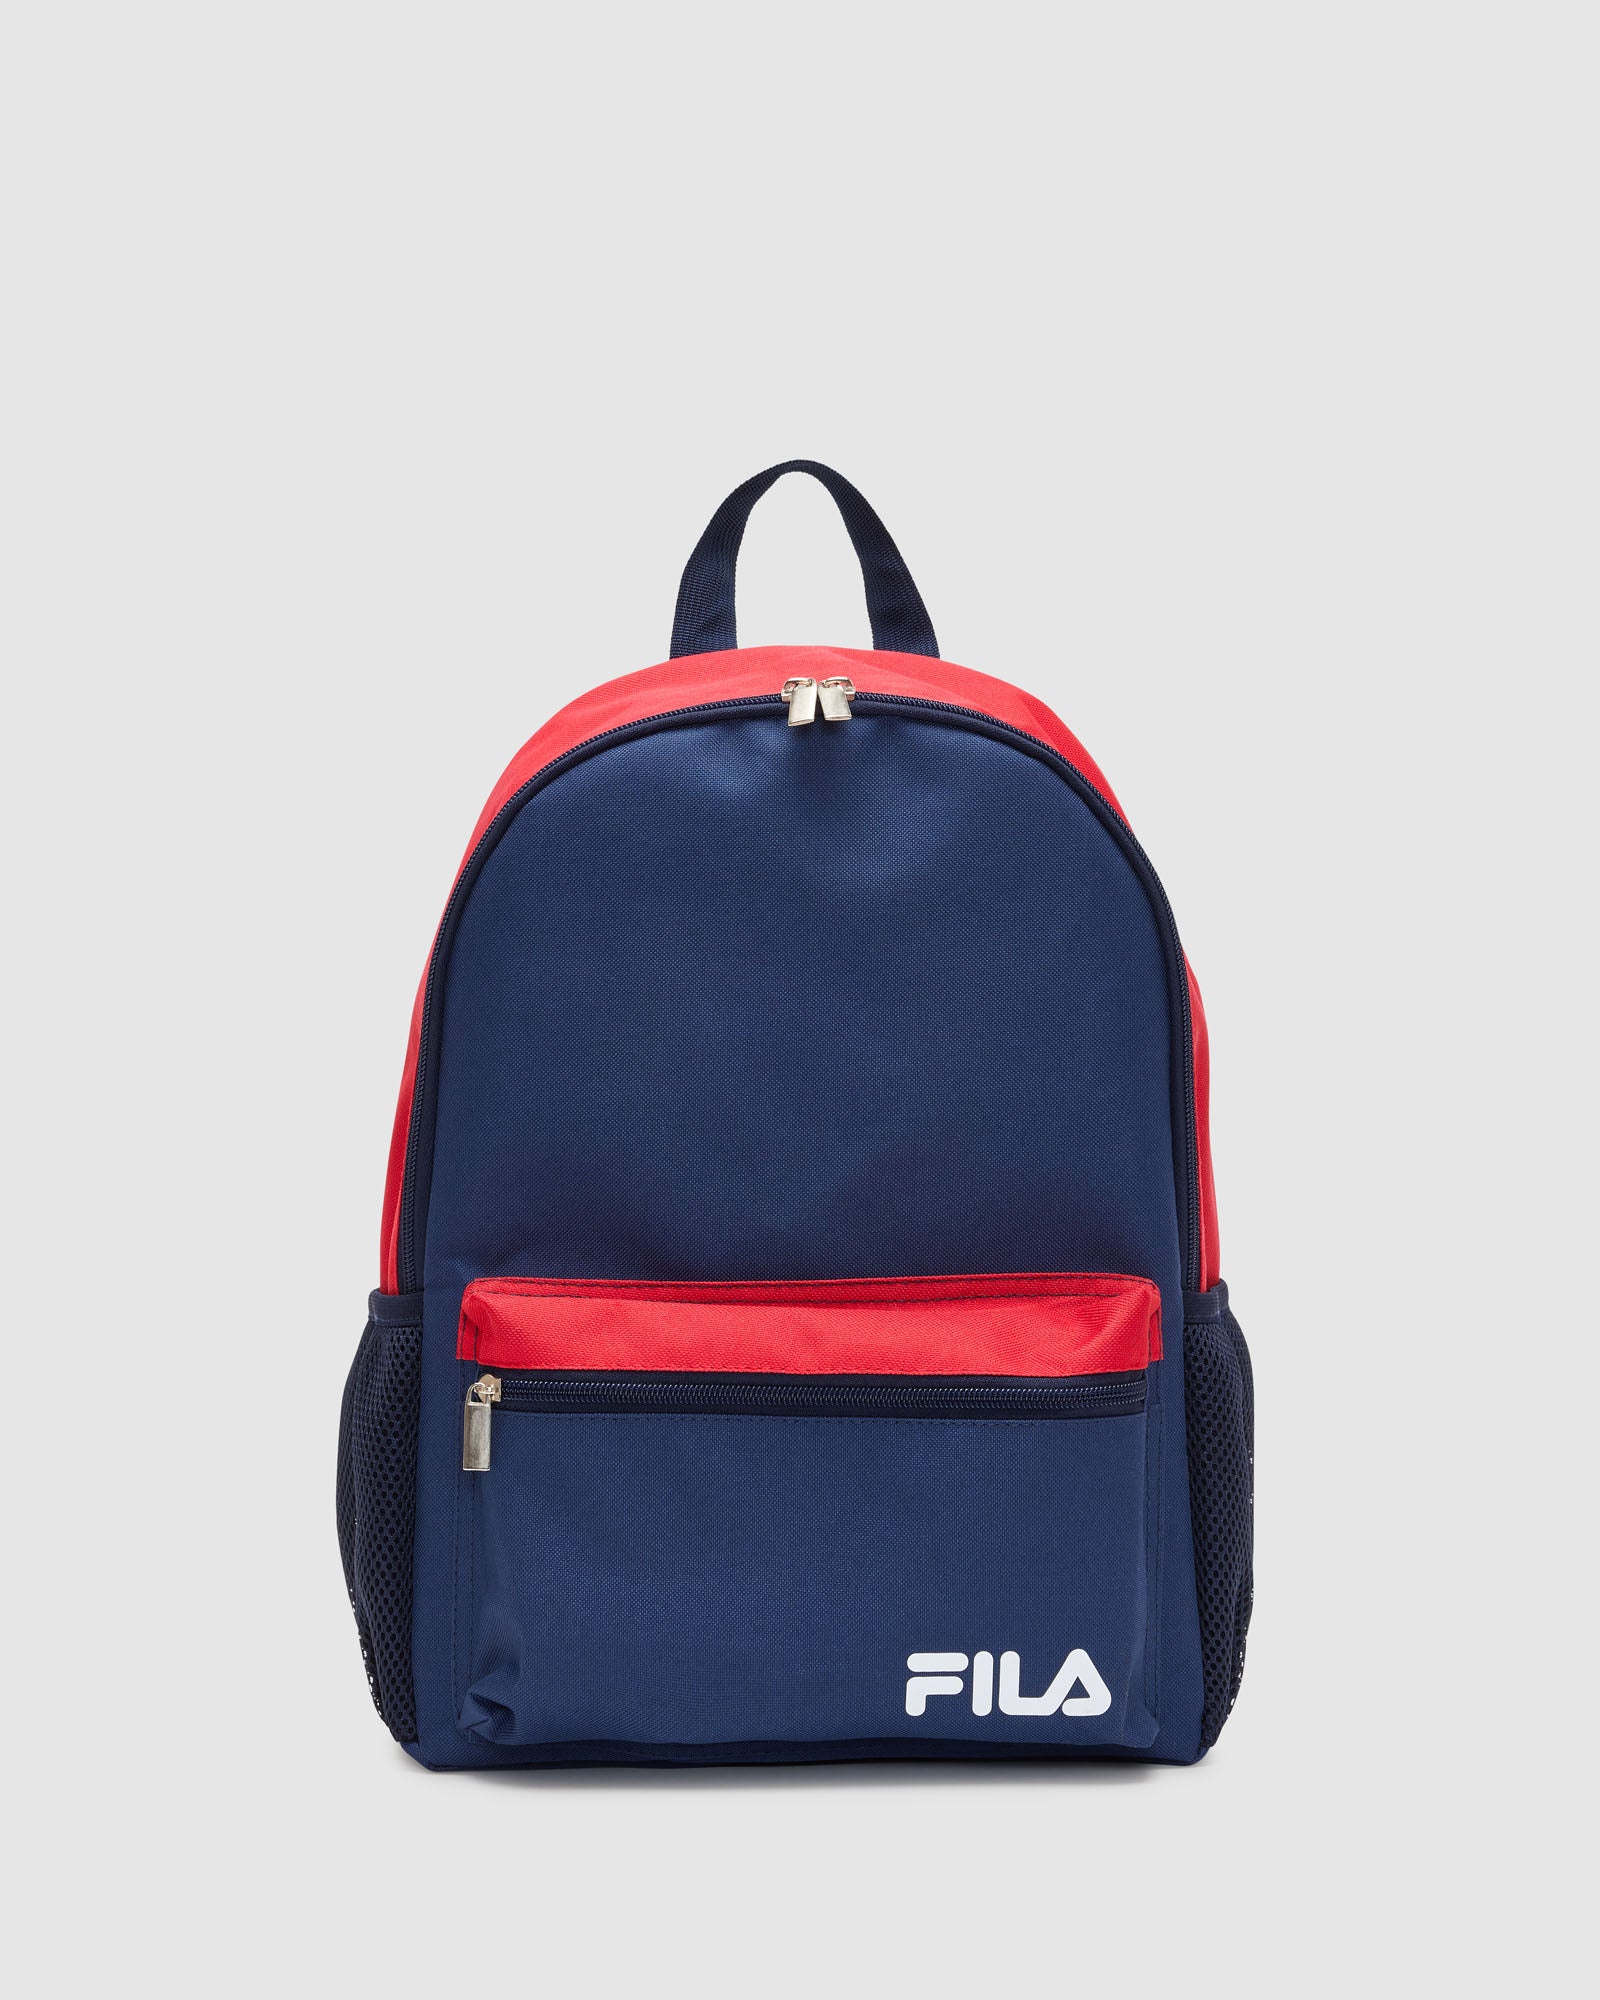 FILA Scuola Bag | FILA Australia